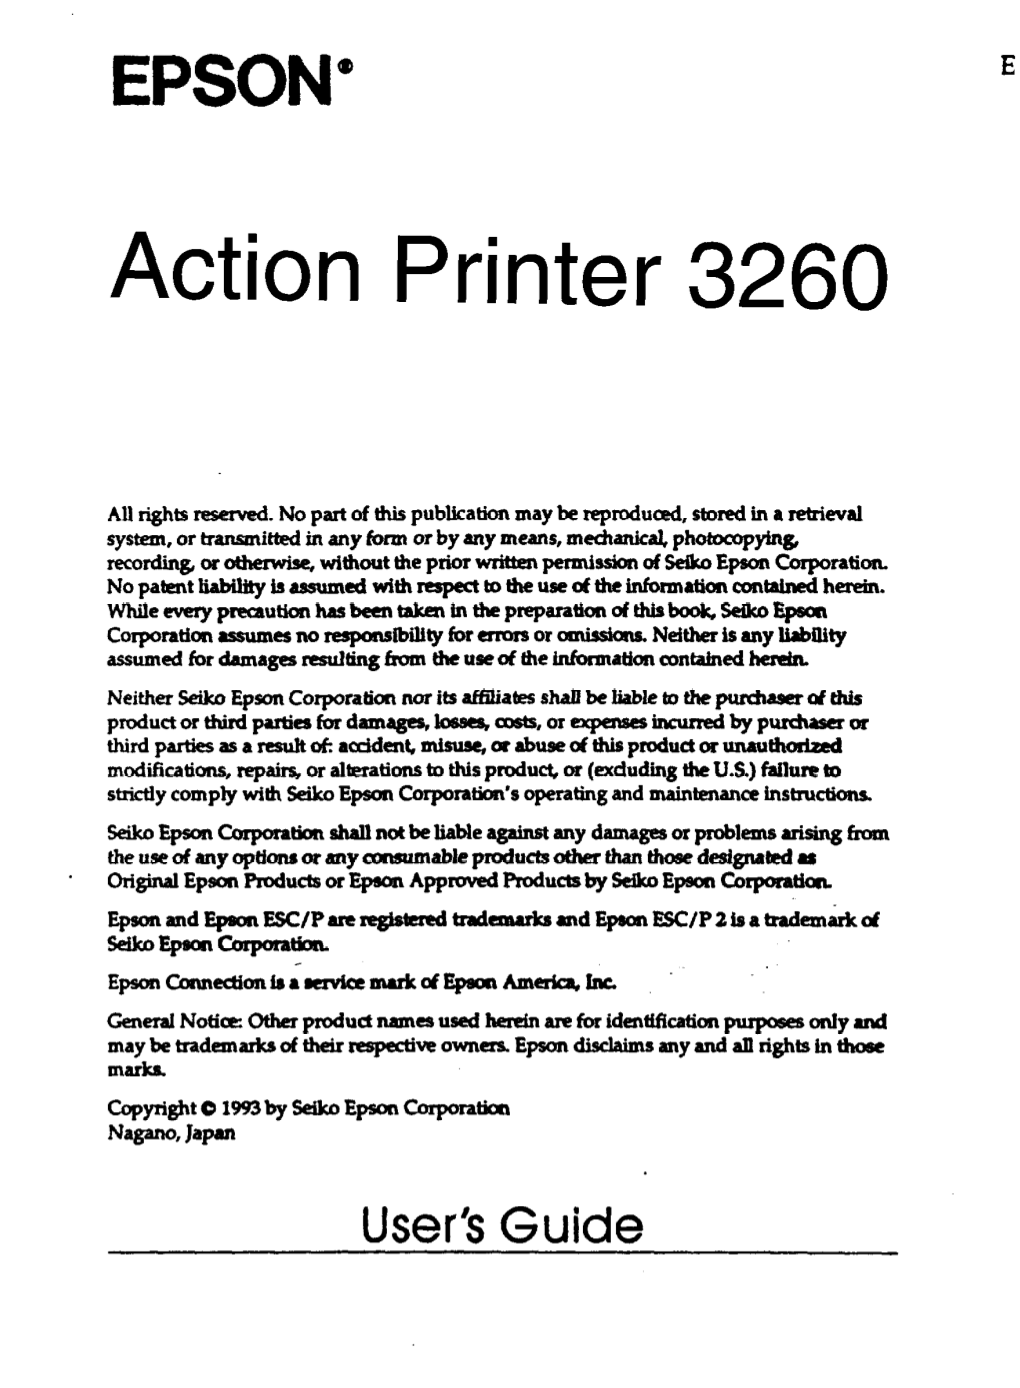 Actionprinter 3260 Or LQ-150